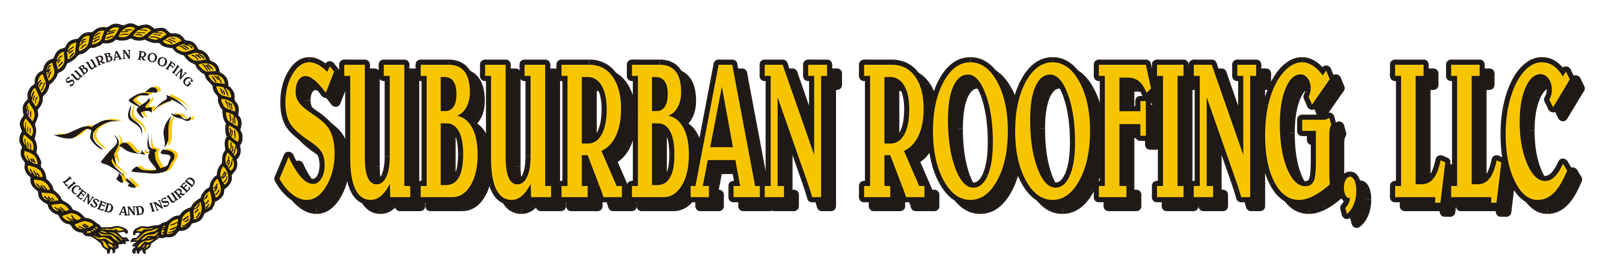 Suburban Roofing LLC logo